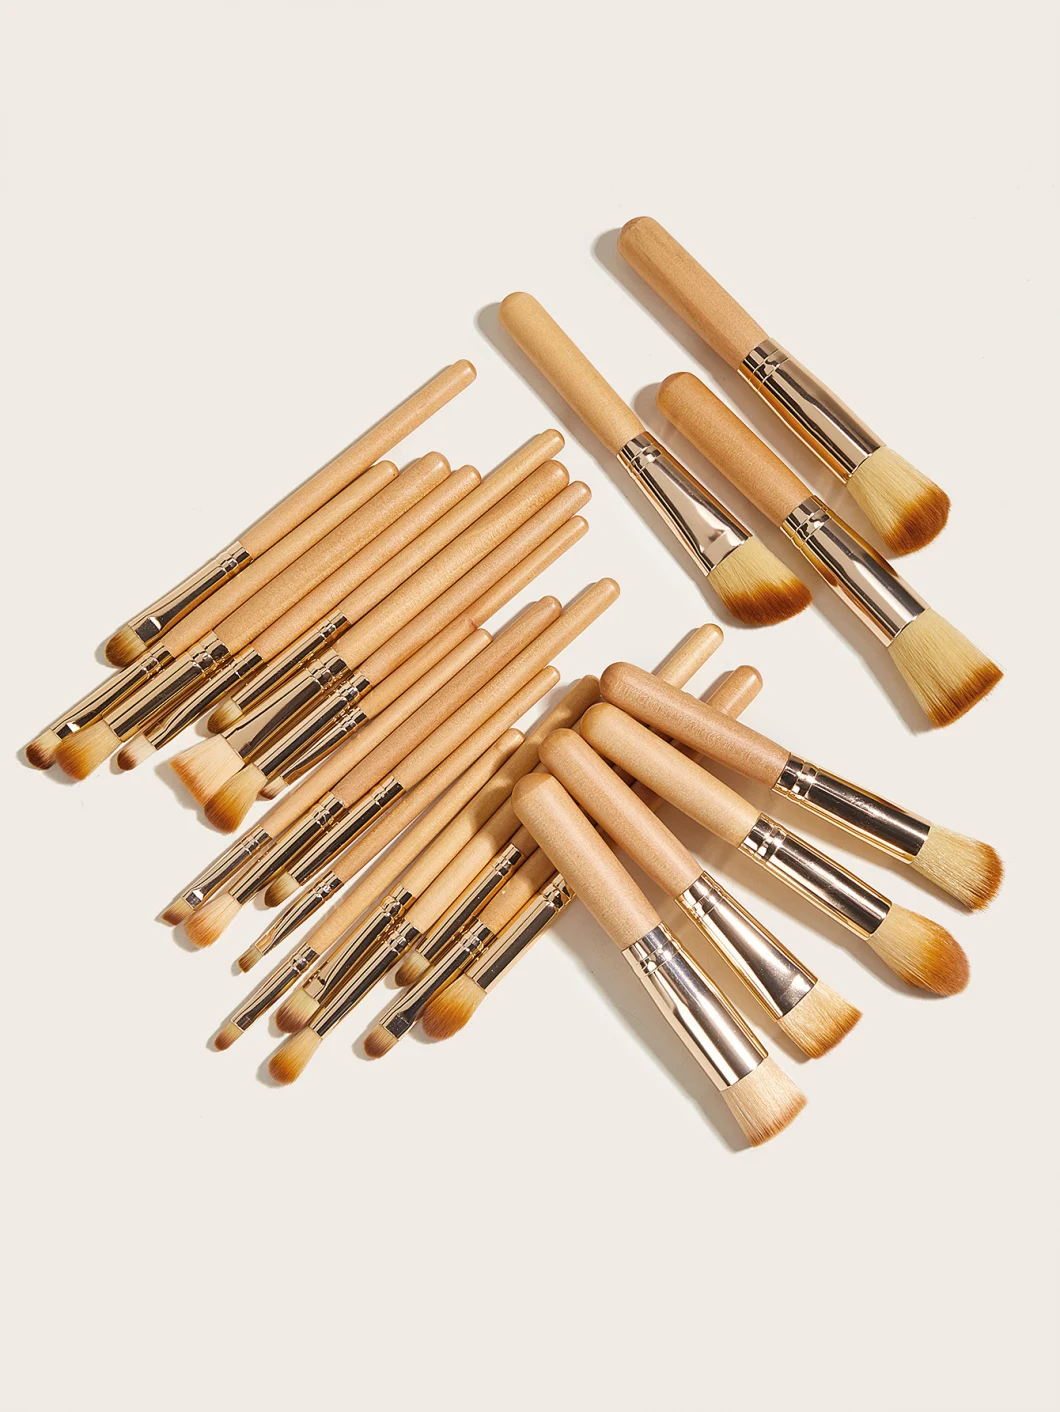 Professional Makeup Artist Brush Set 25PCS Top Quality Concealer Blending Powder Eyelash Brush